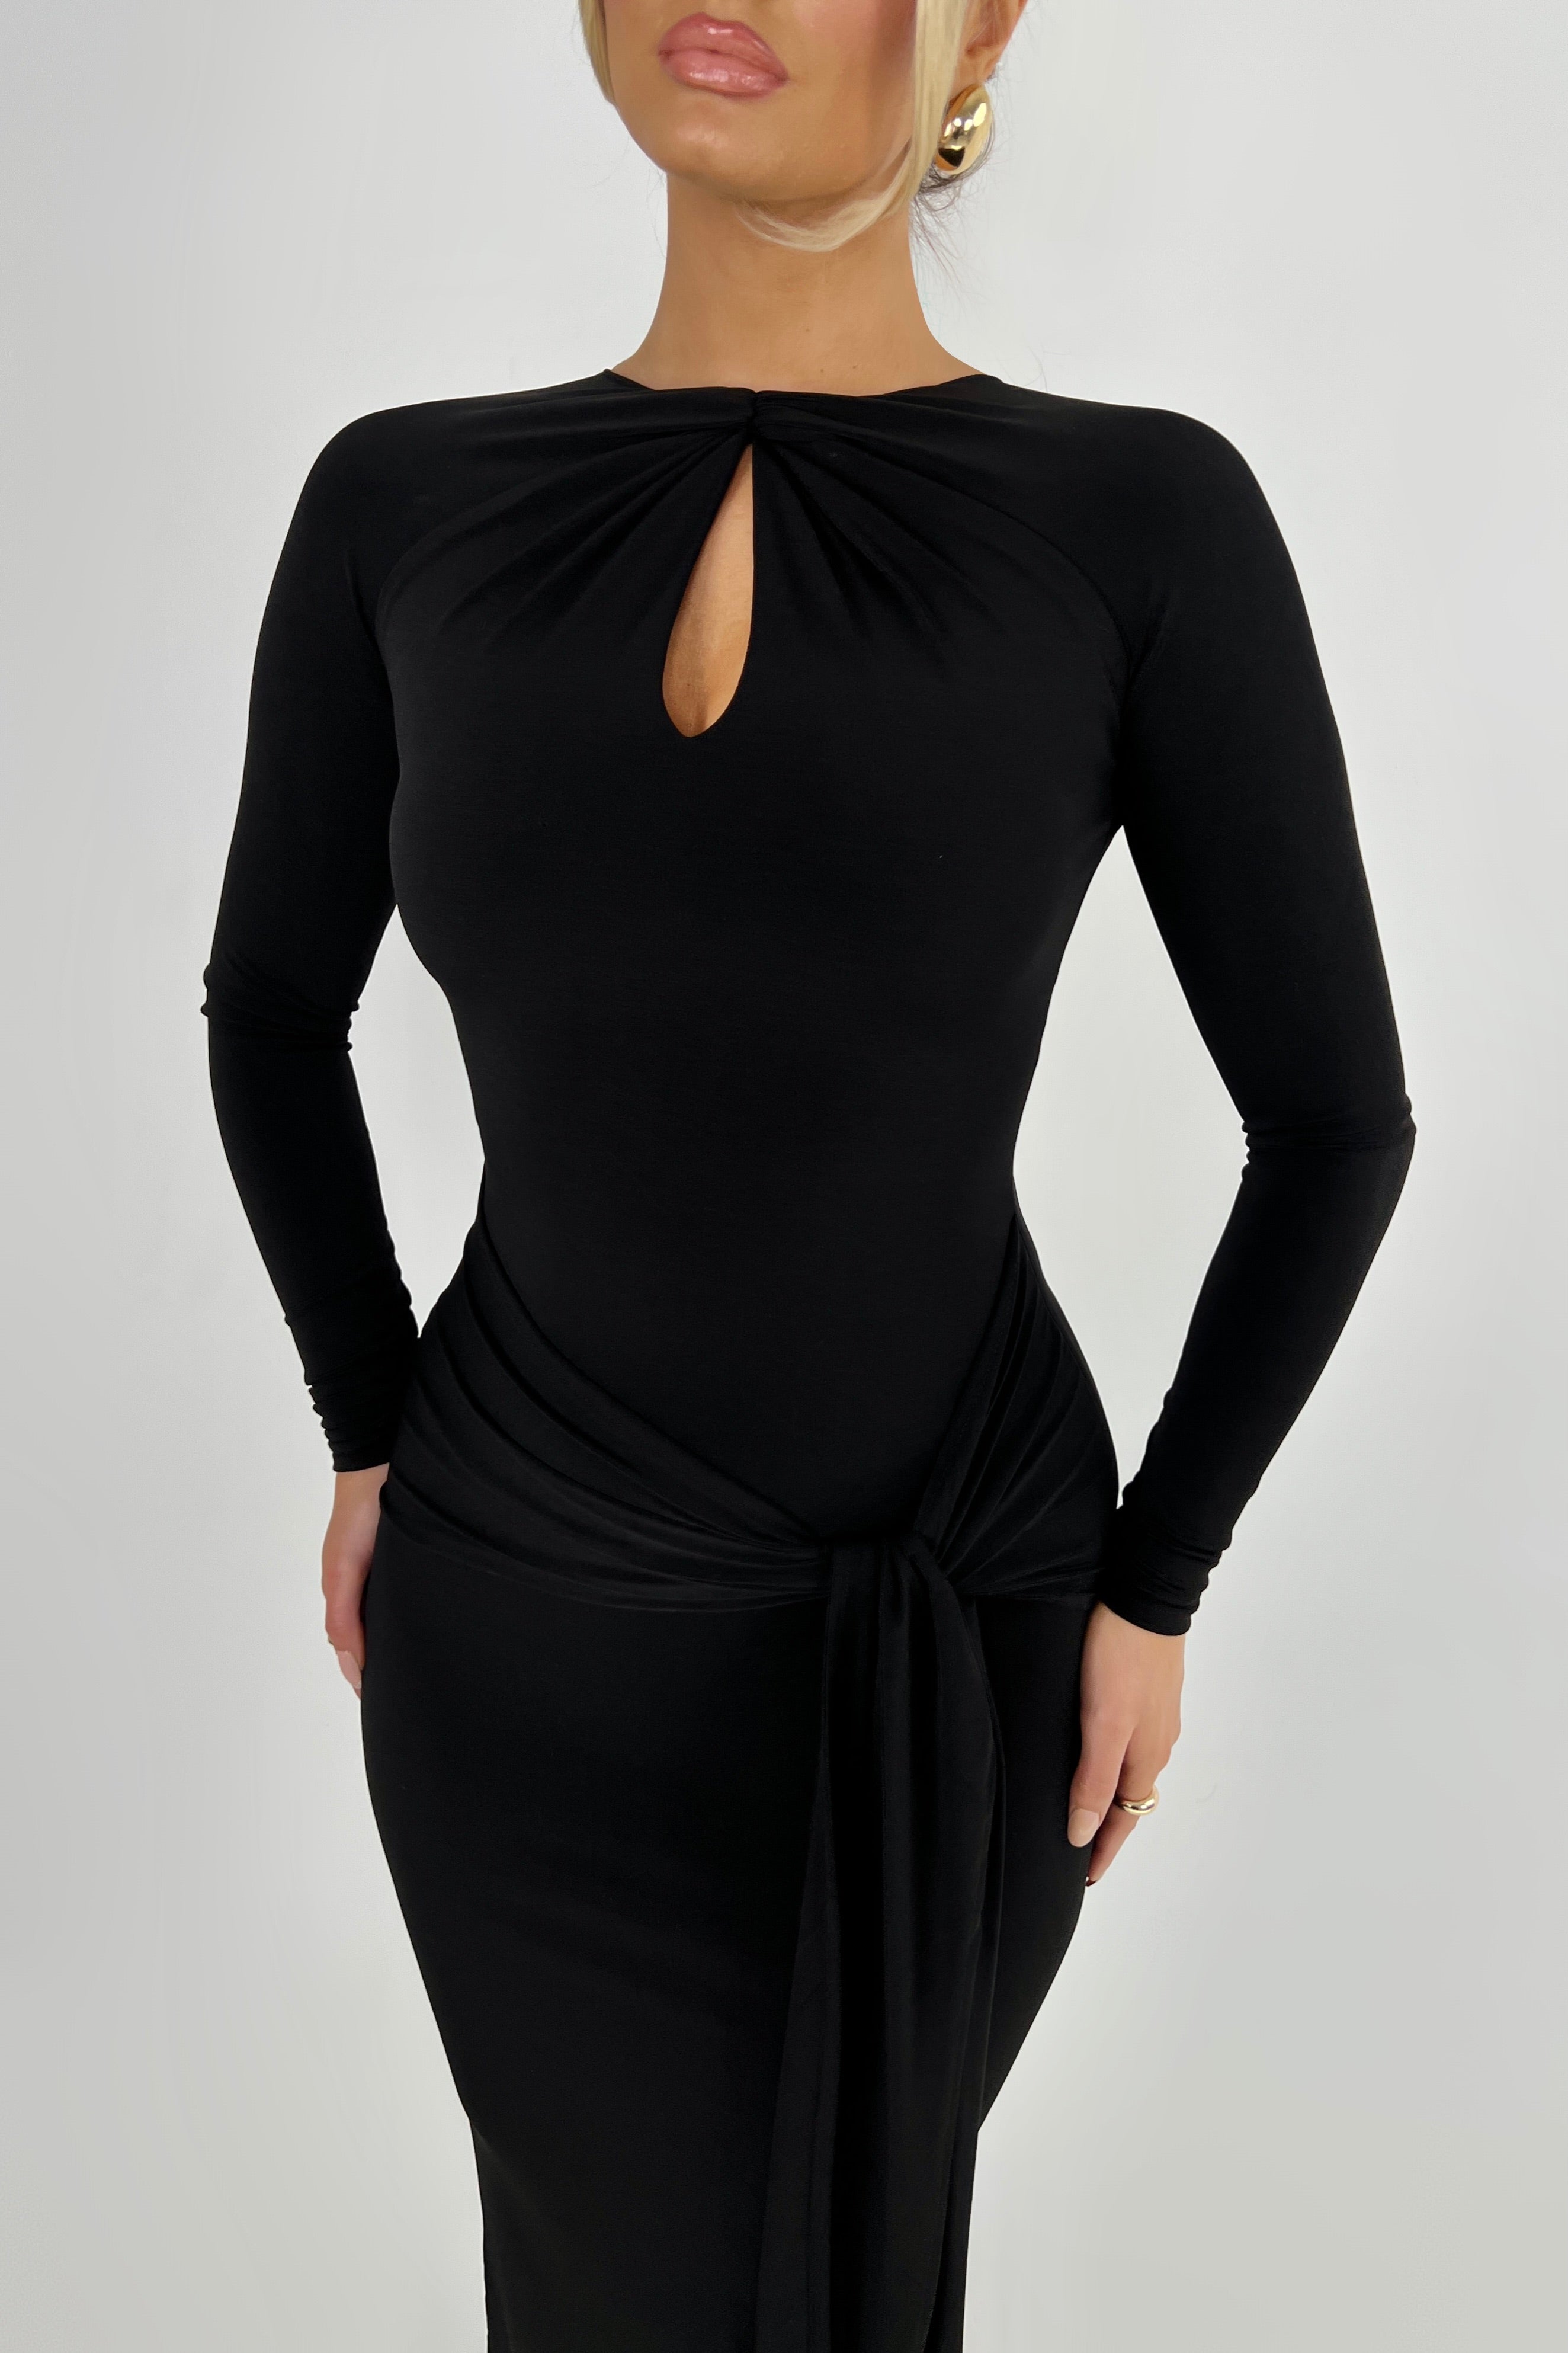 Seonie Black Dress